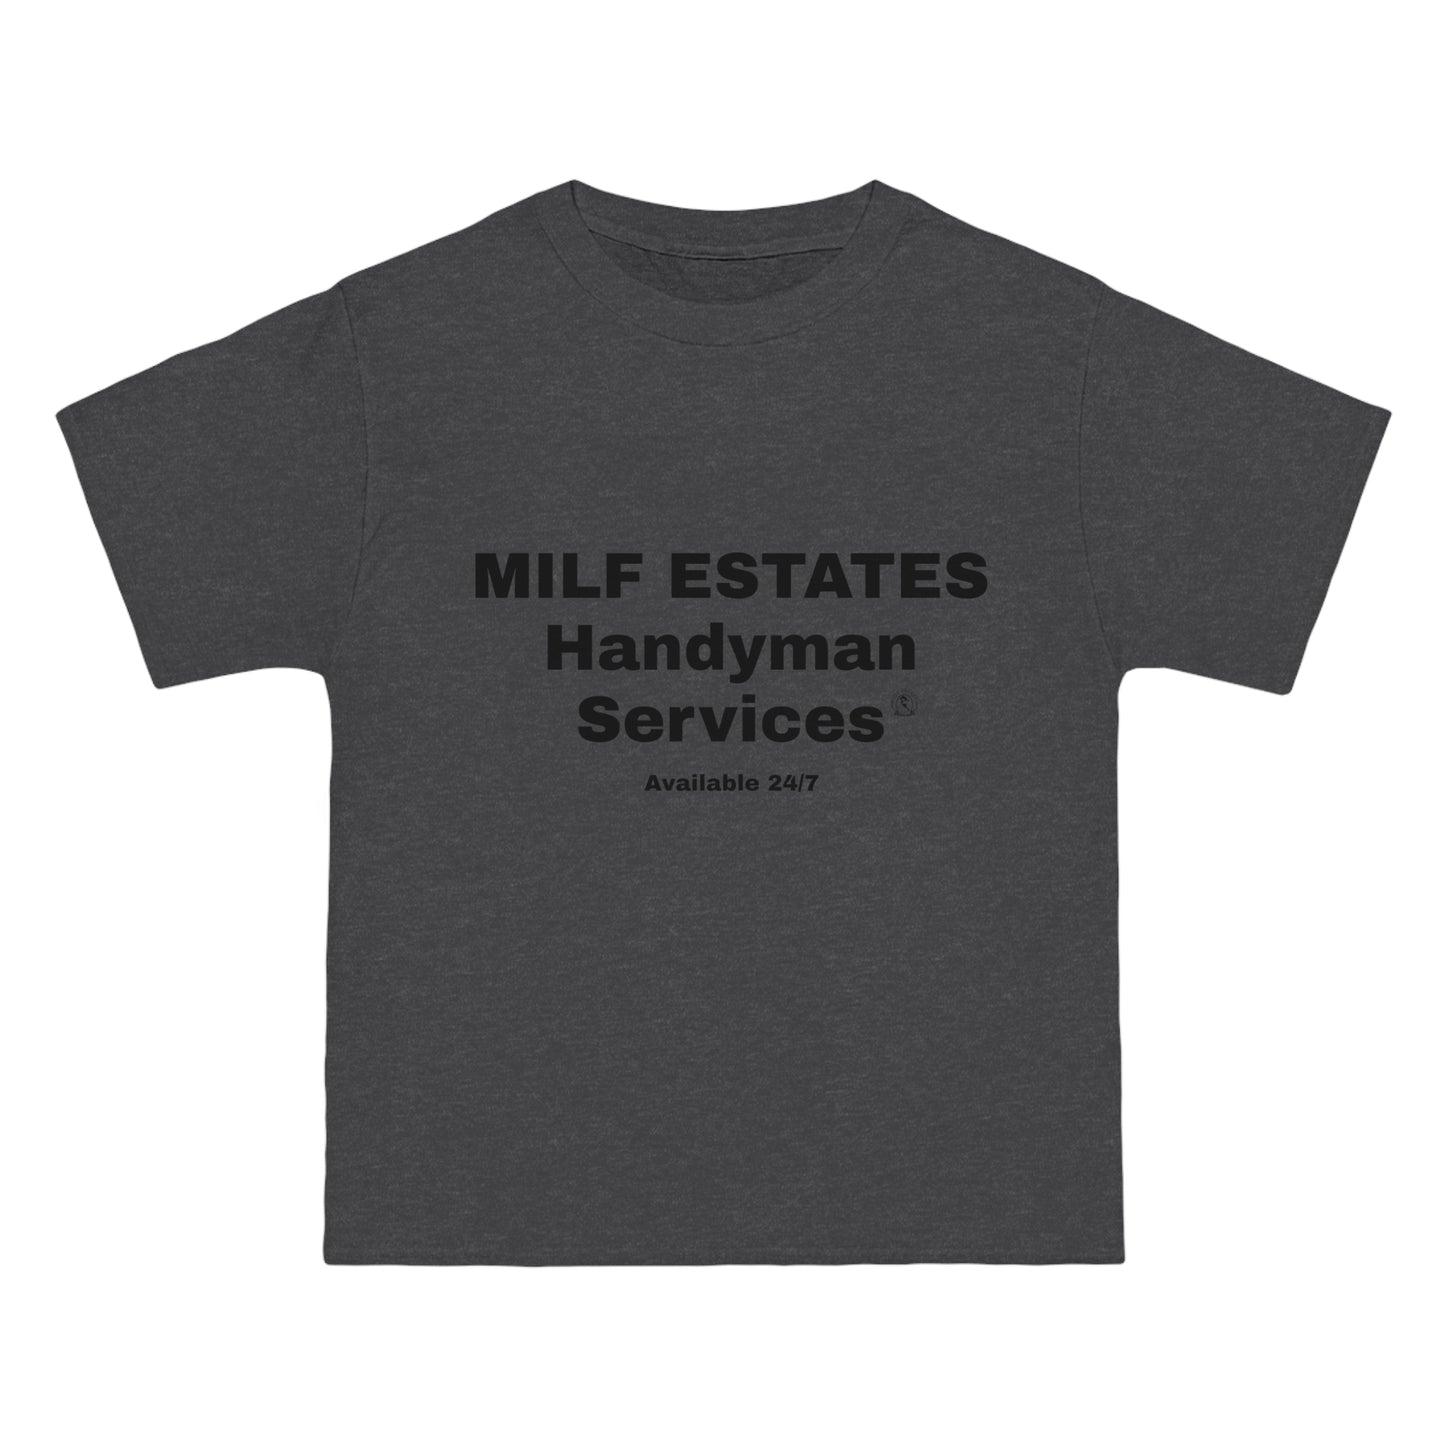 MILF ESTATES Handyman Services  "Available 24/7'